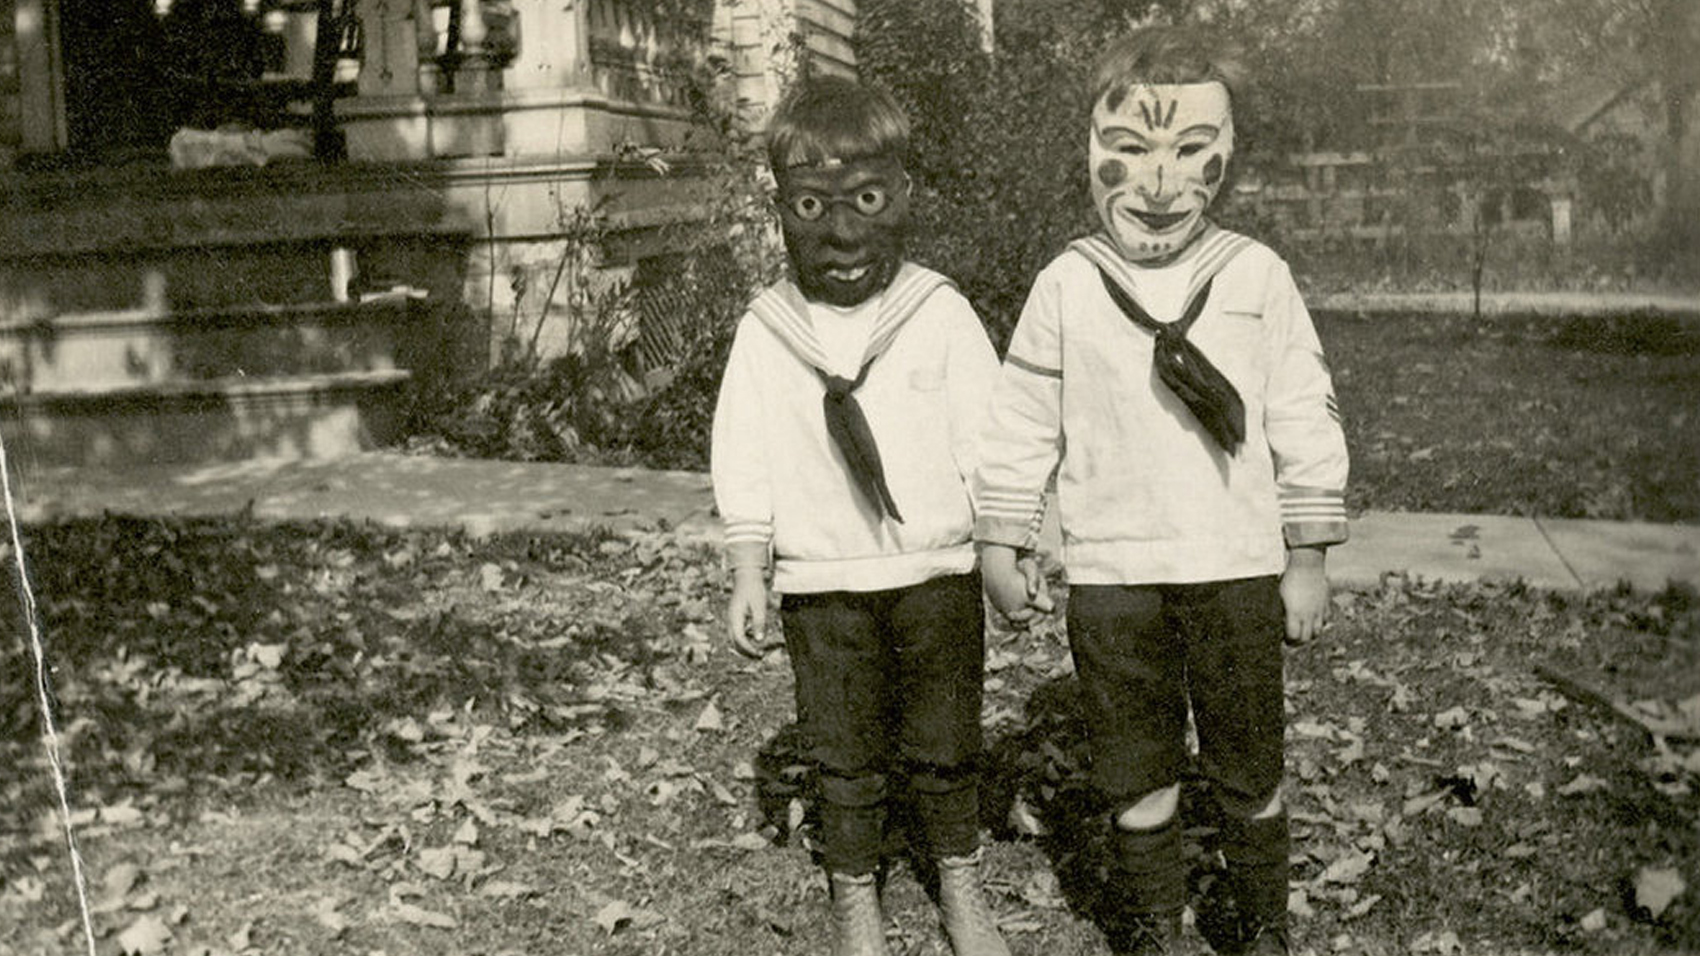 creepy vintage photos